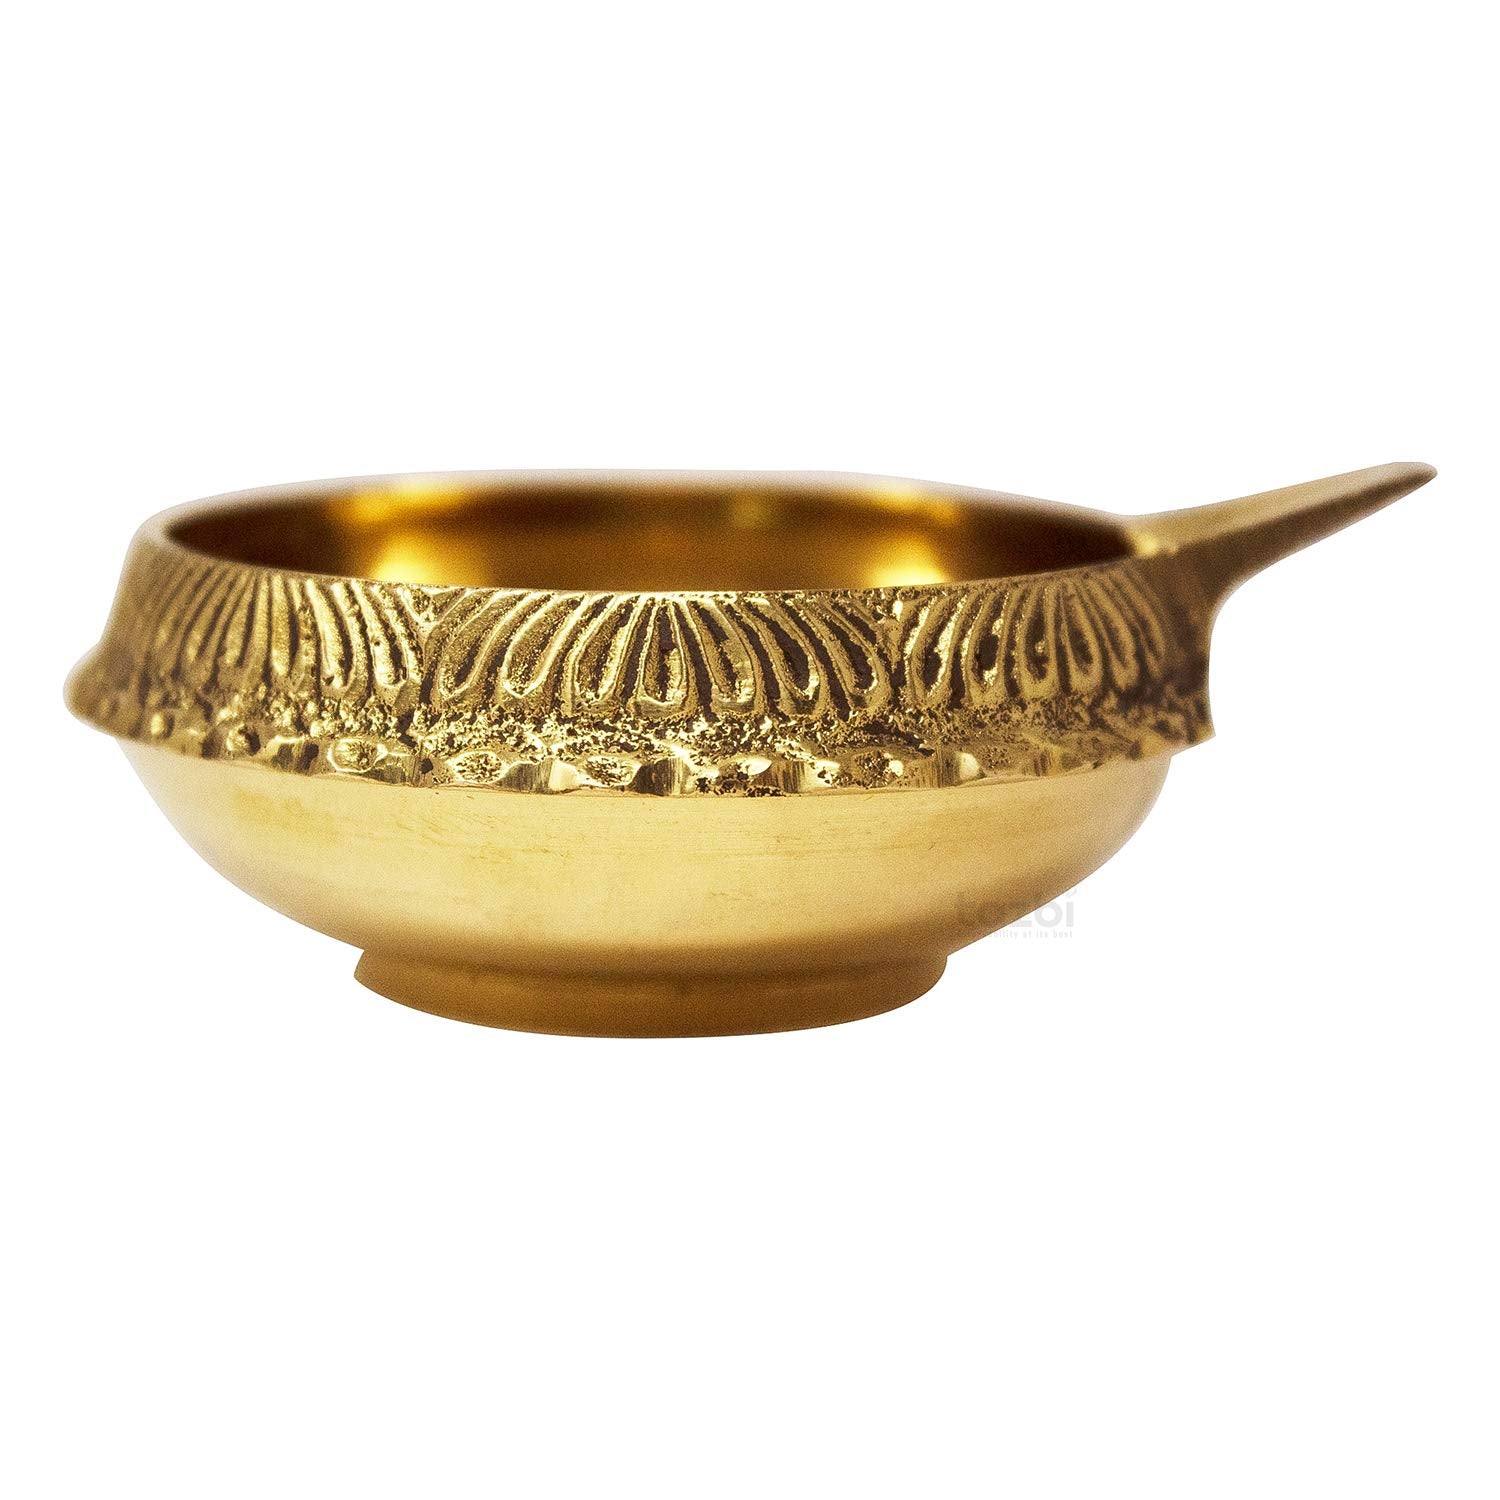 BENGALEN Kuber Diya Medium Brass Handmade Oil Lamp with Golden Engraved Made of Virgin Brass Metal Diwali Diya Vilakku for Diwali Decoration Puja Traditional Indian Deepawali Pooja Gift Items